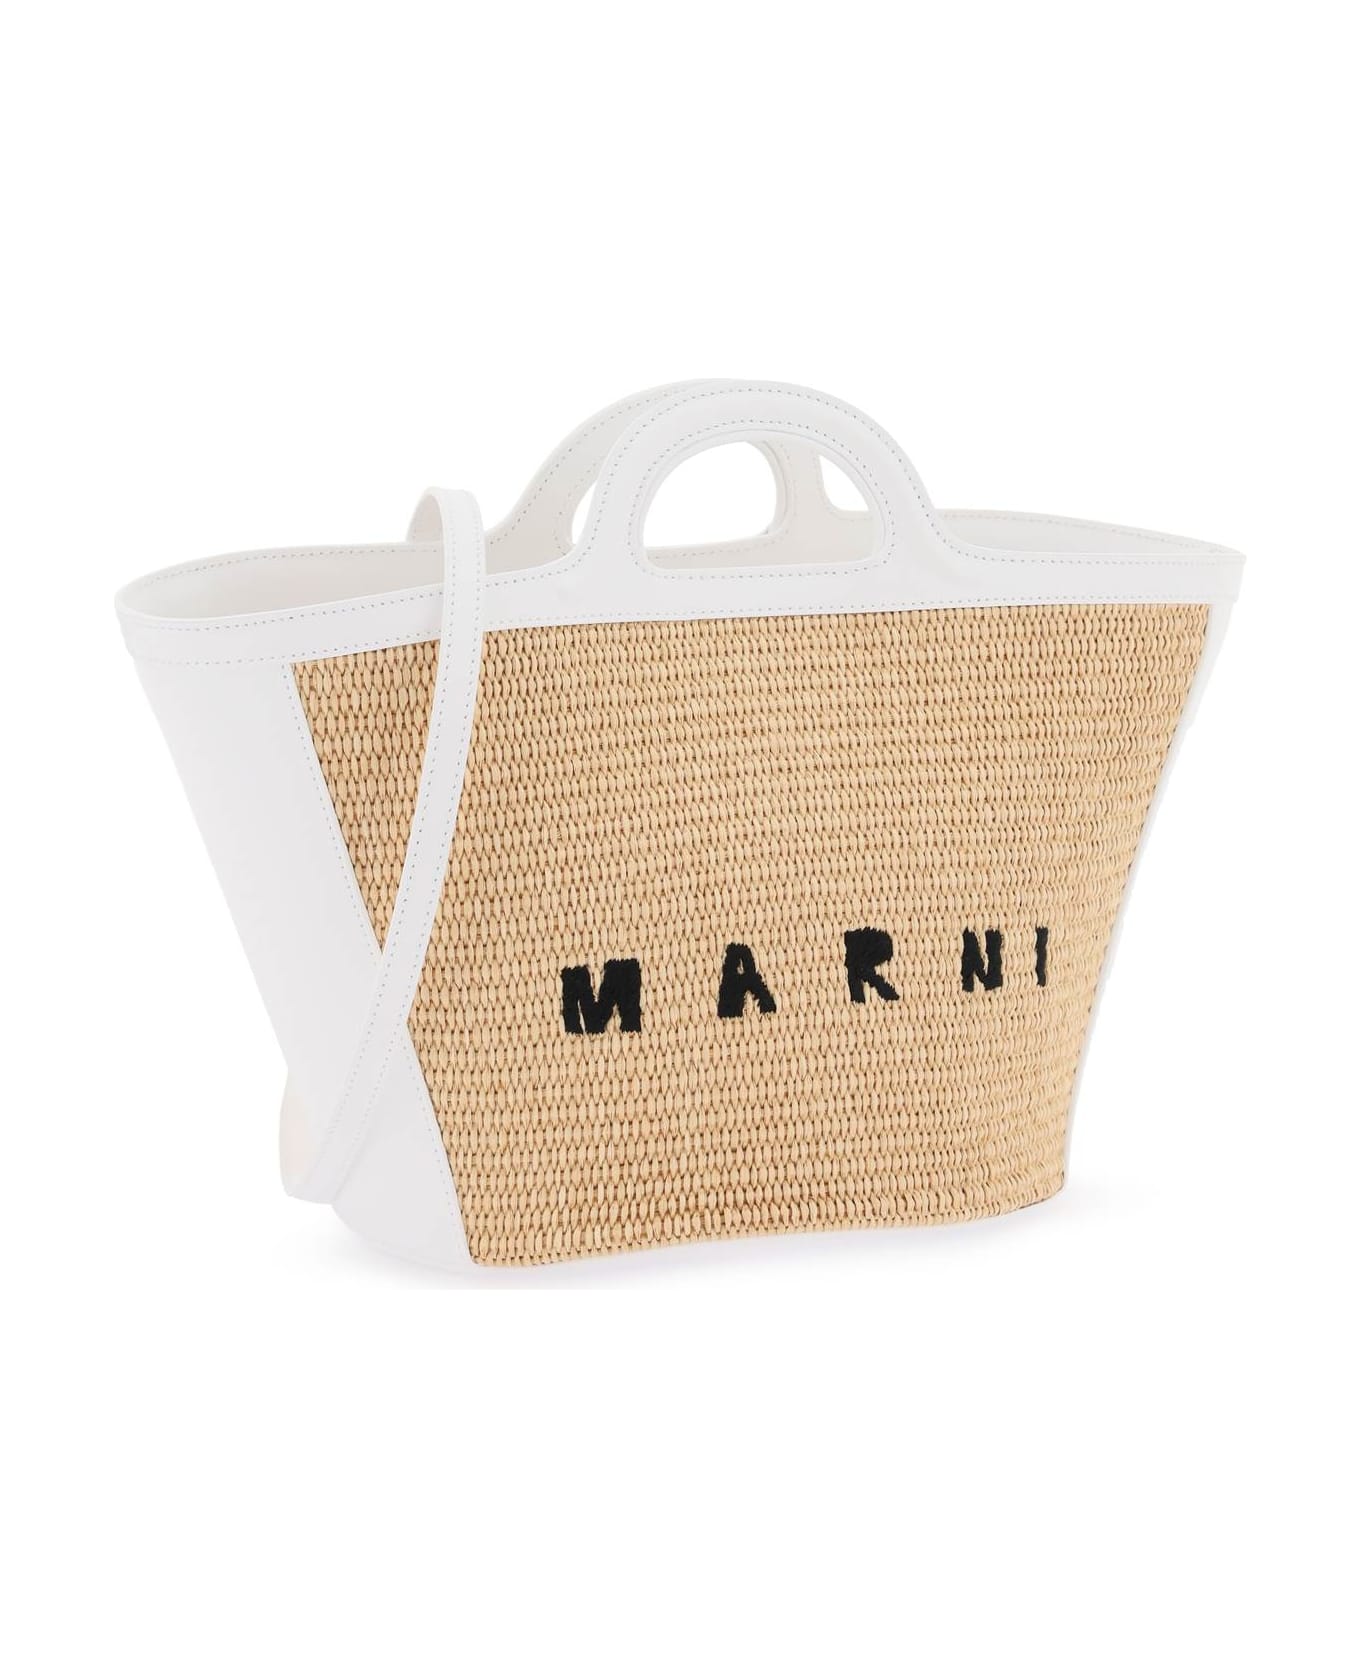 Marni Small Tropicalia Summer Bag In White Leather And Natural Raffia - White/beige トートバッグ